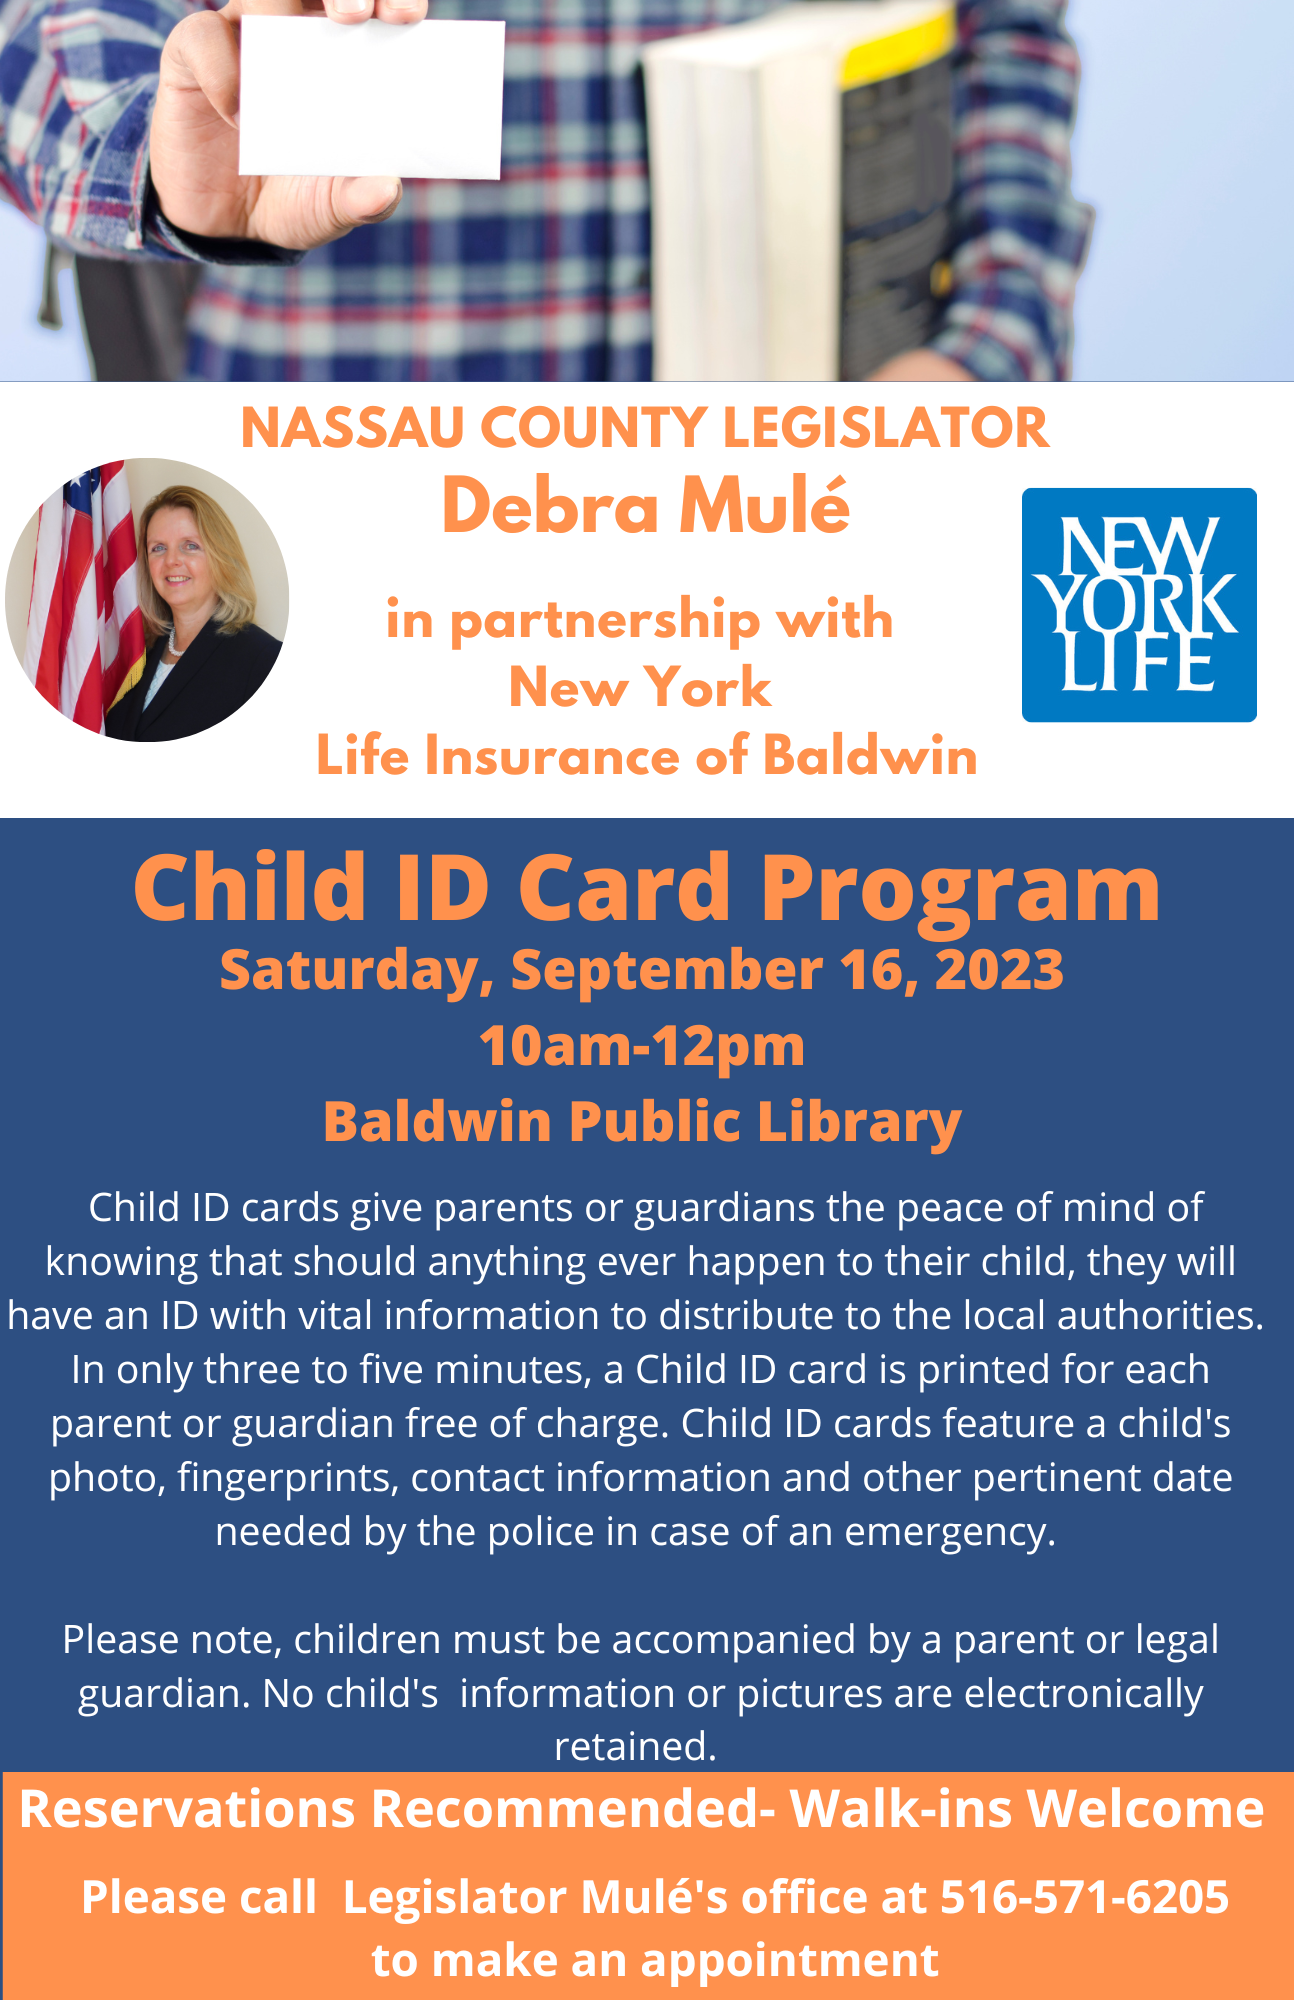 Child ID event